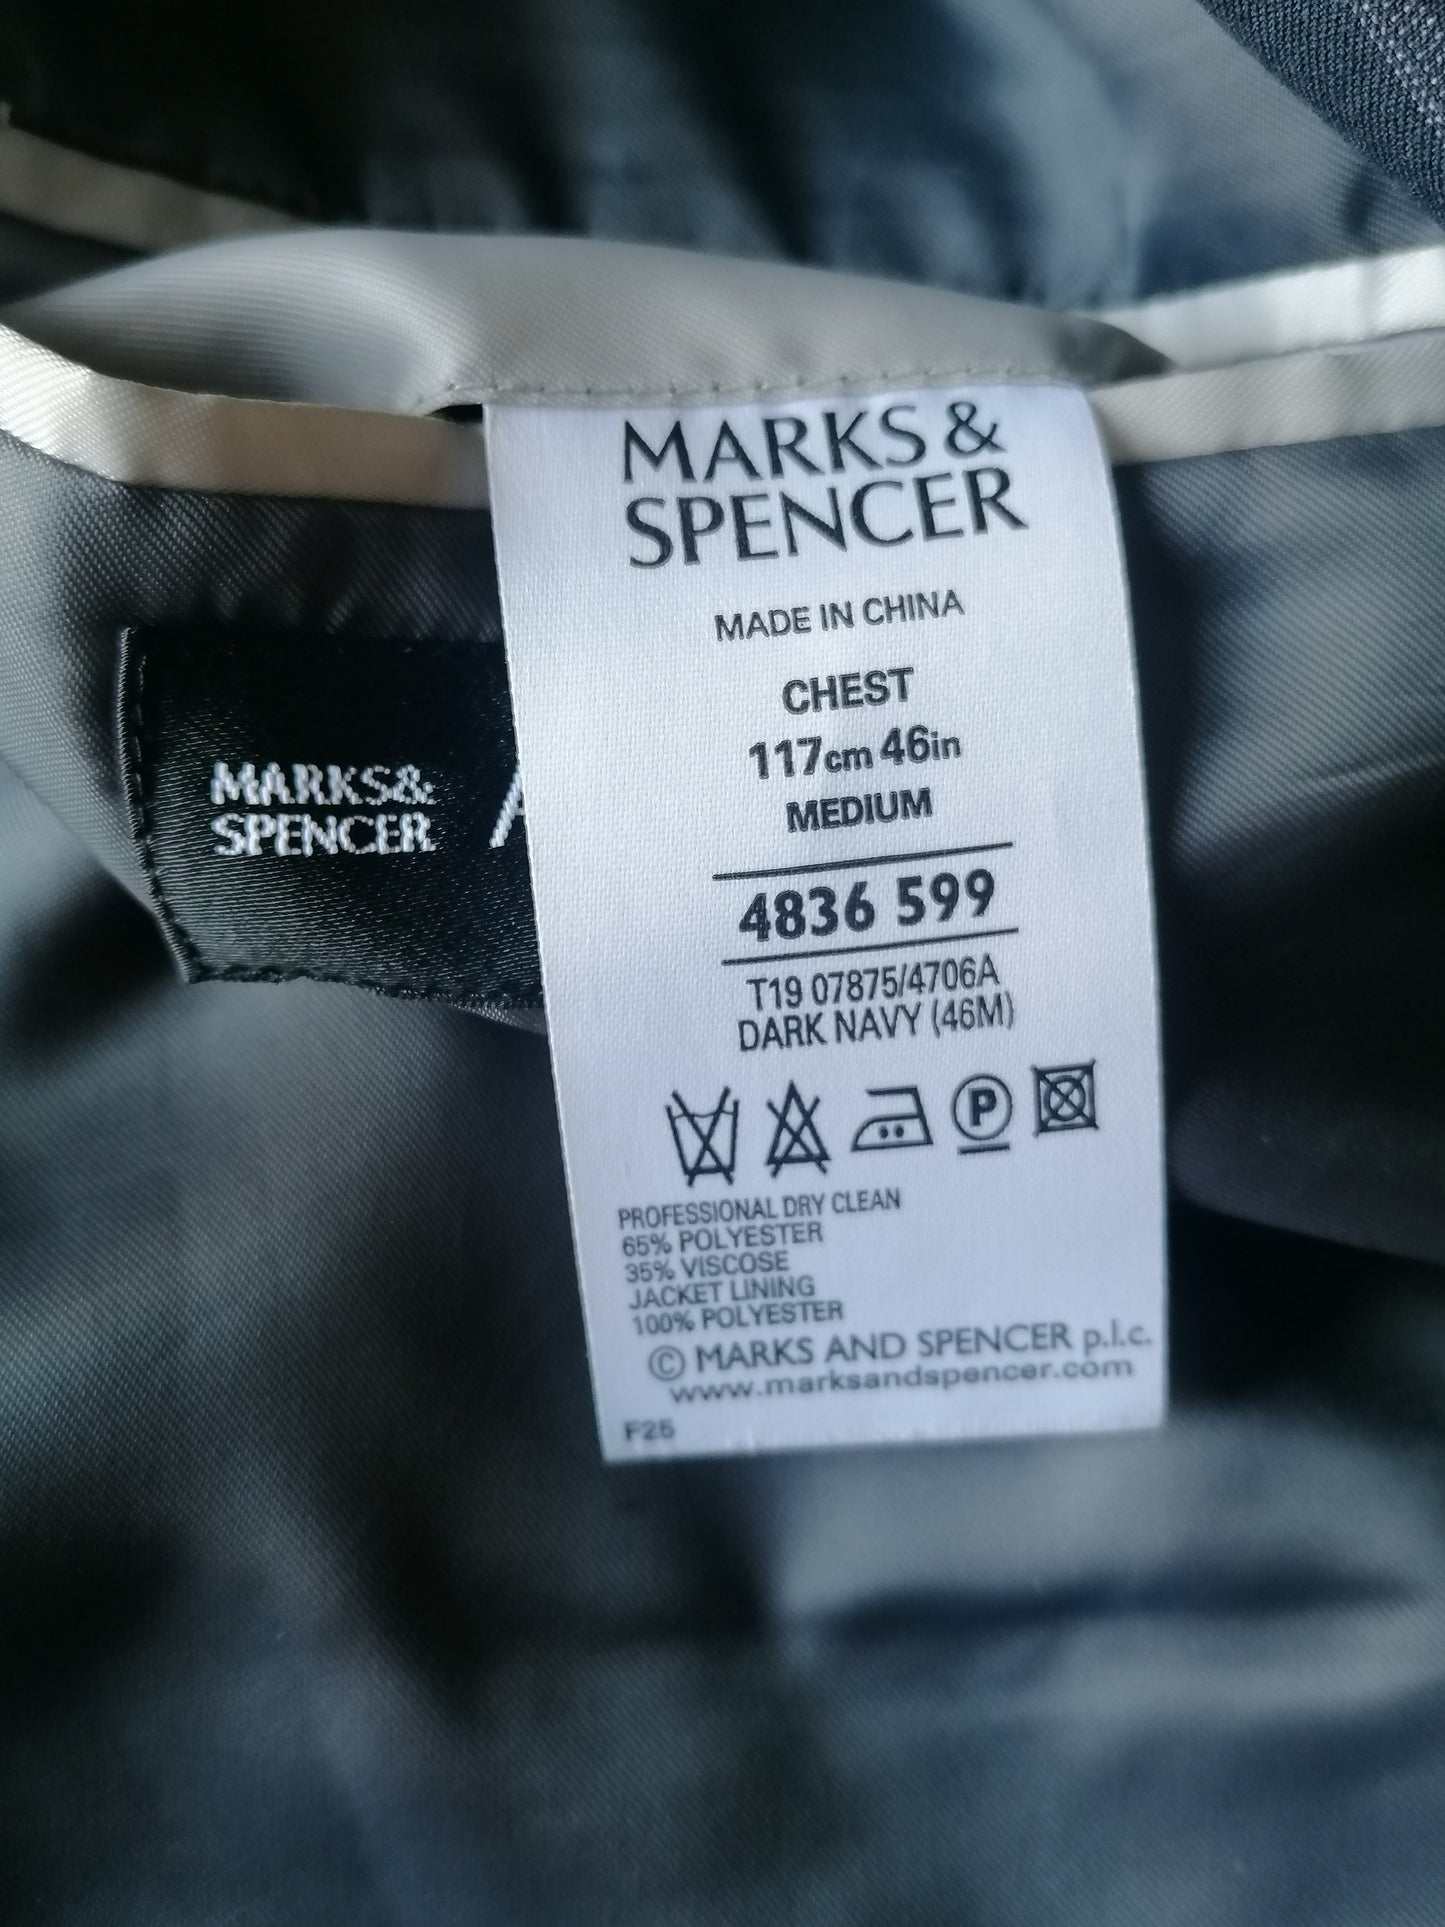 Autógrafo (Marks & Spencer) Chaqueta. Blanco y negro a rayas. Tamaño 56 / xl.